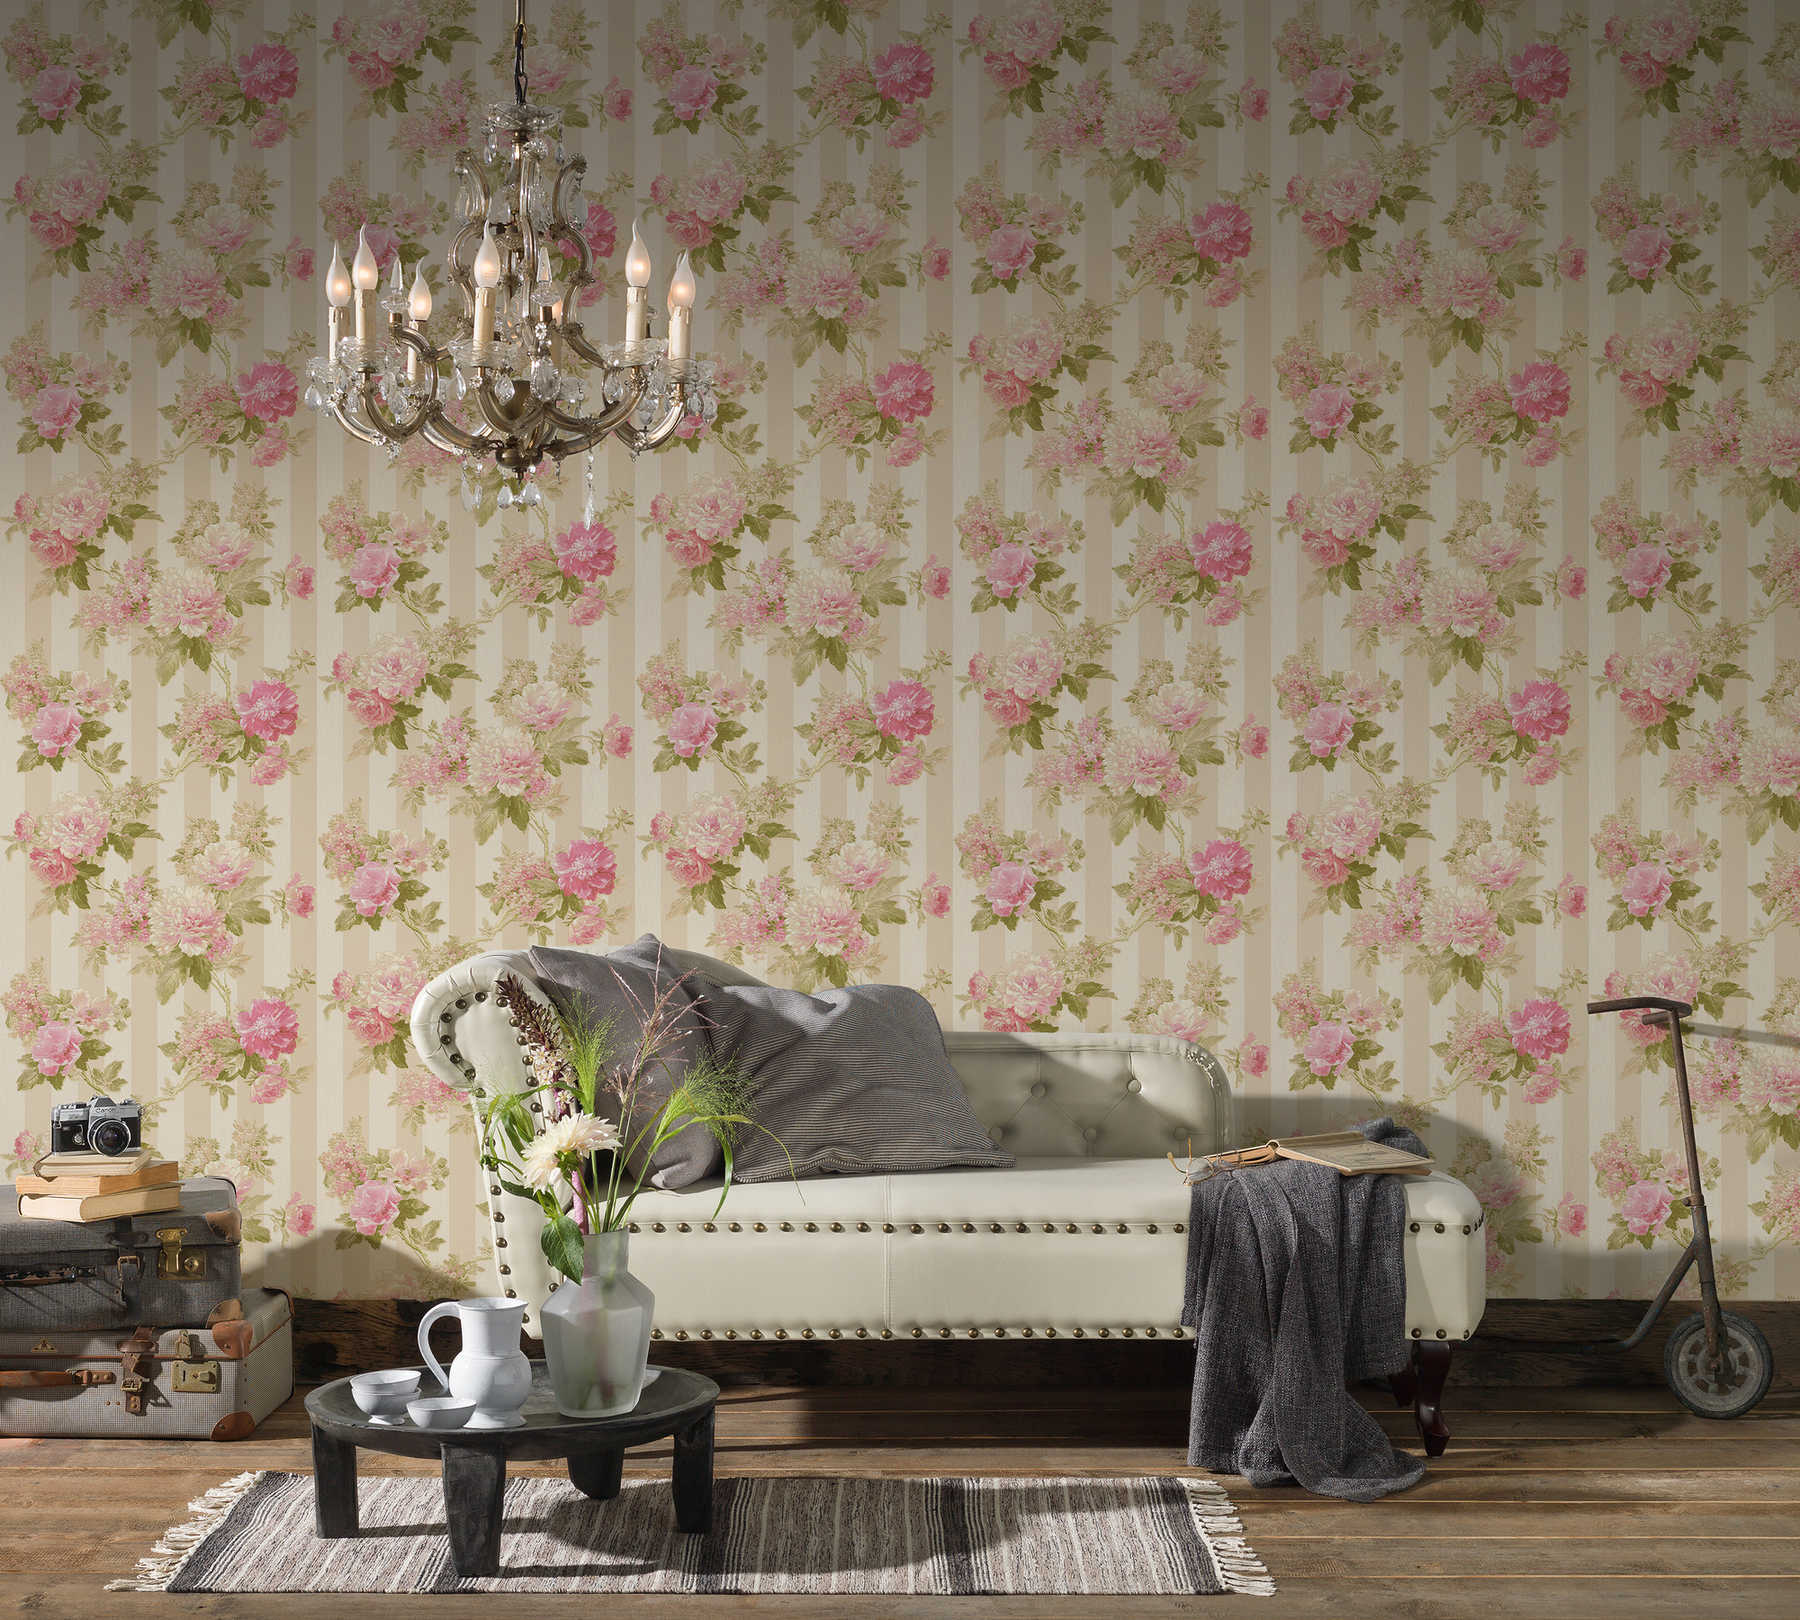             Wallpaper floral motif and stripe design - pink, green, cream
        